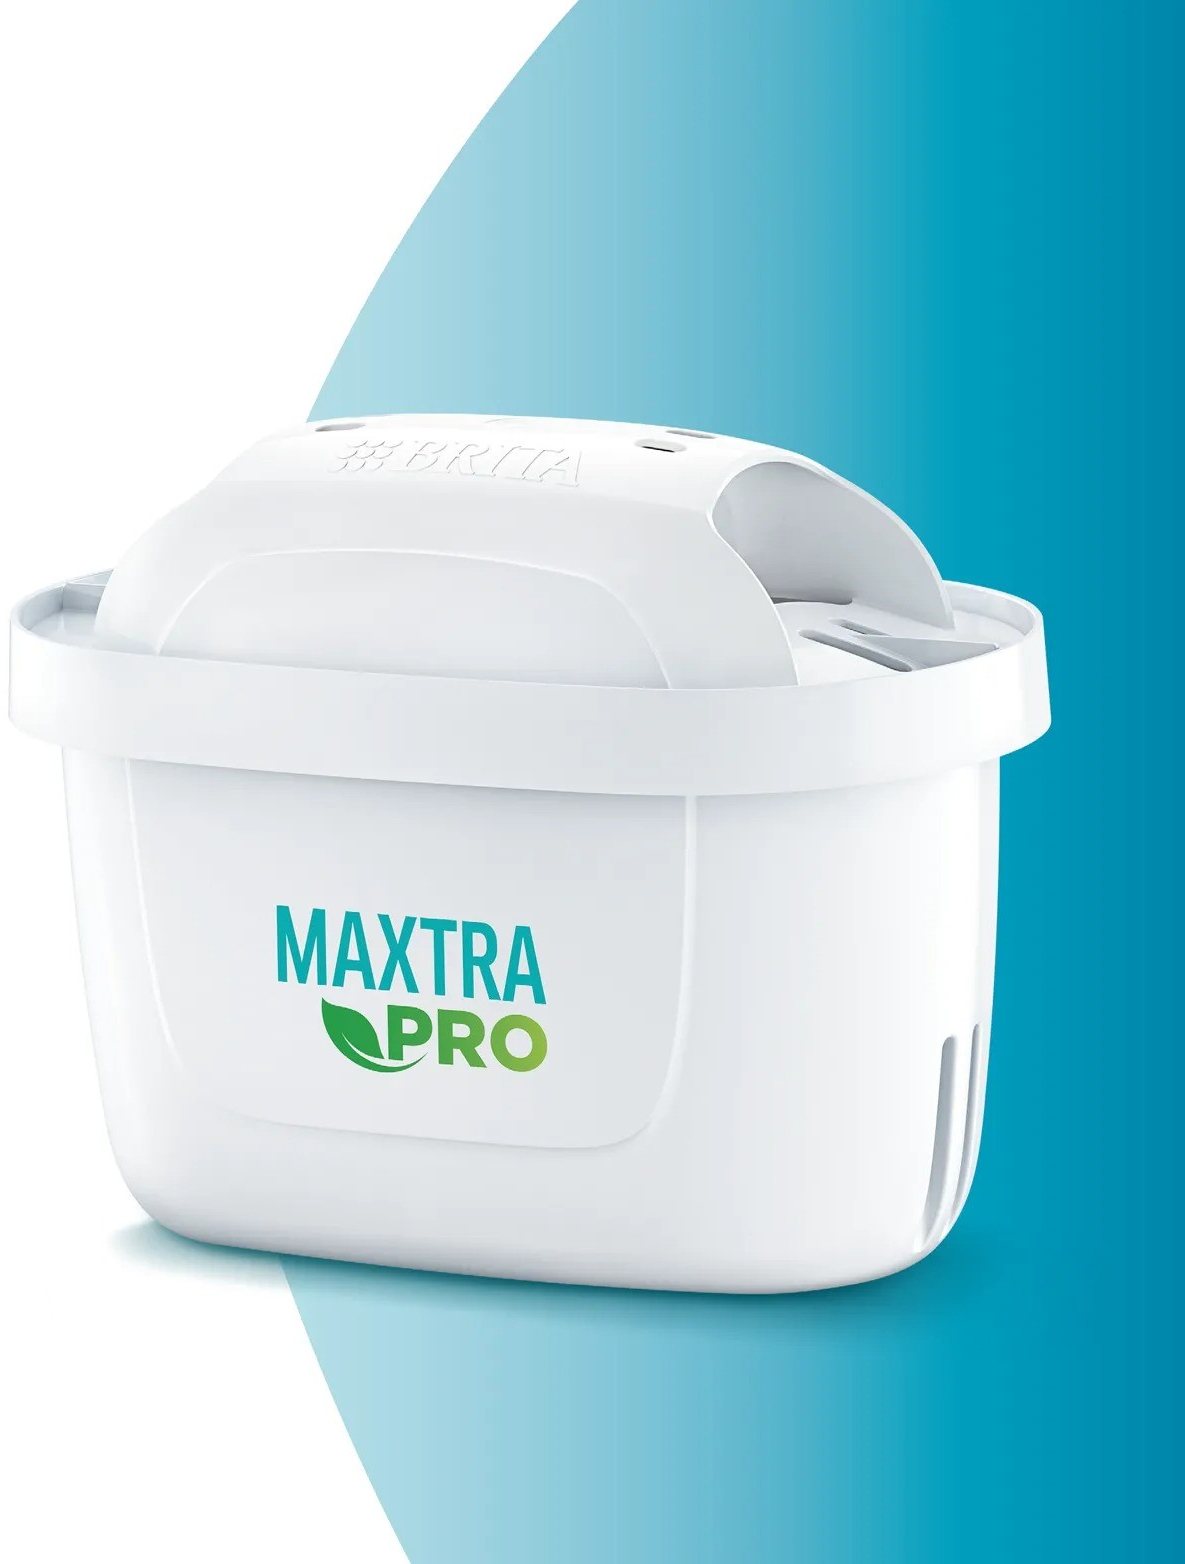 BRITA MAXTRA+ water filter cartridges - 6 pack